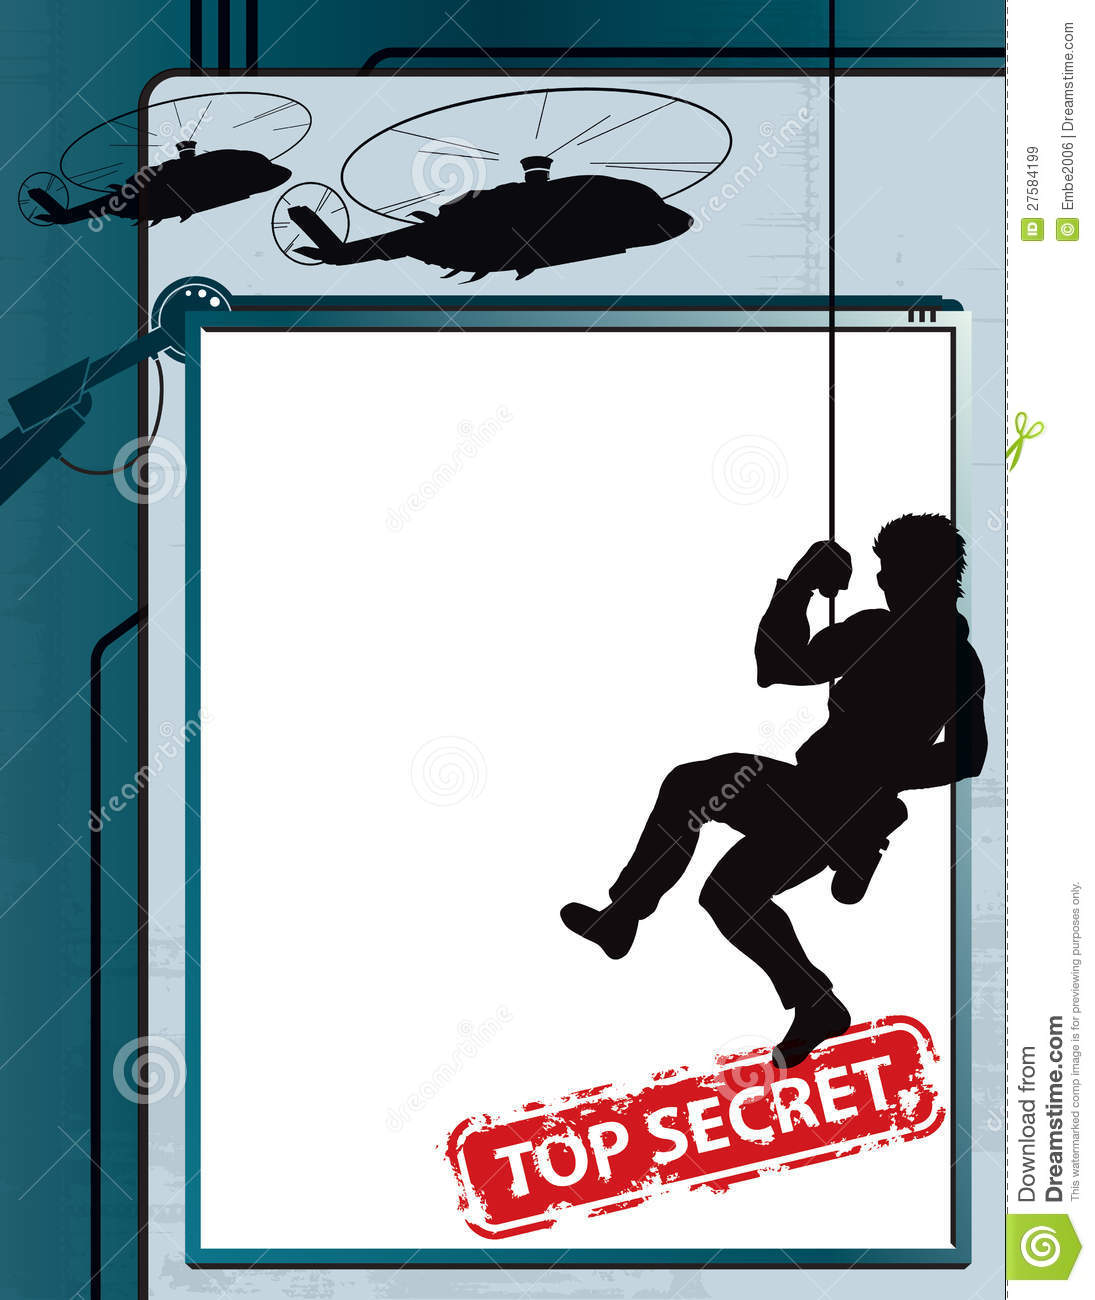 Top Secret Spy Background Royalty Free Stock Images   Image  27584199